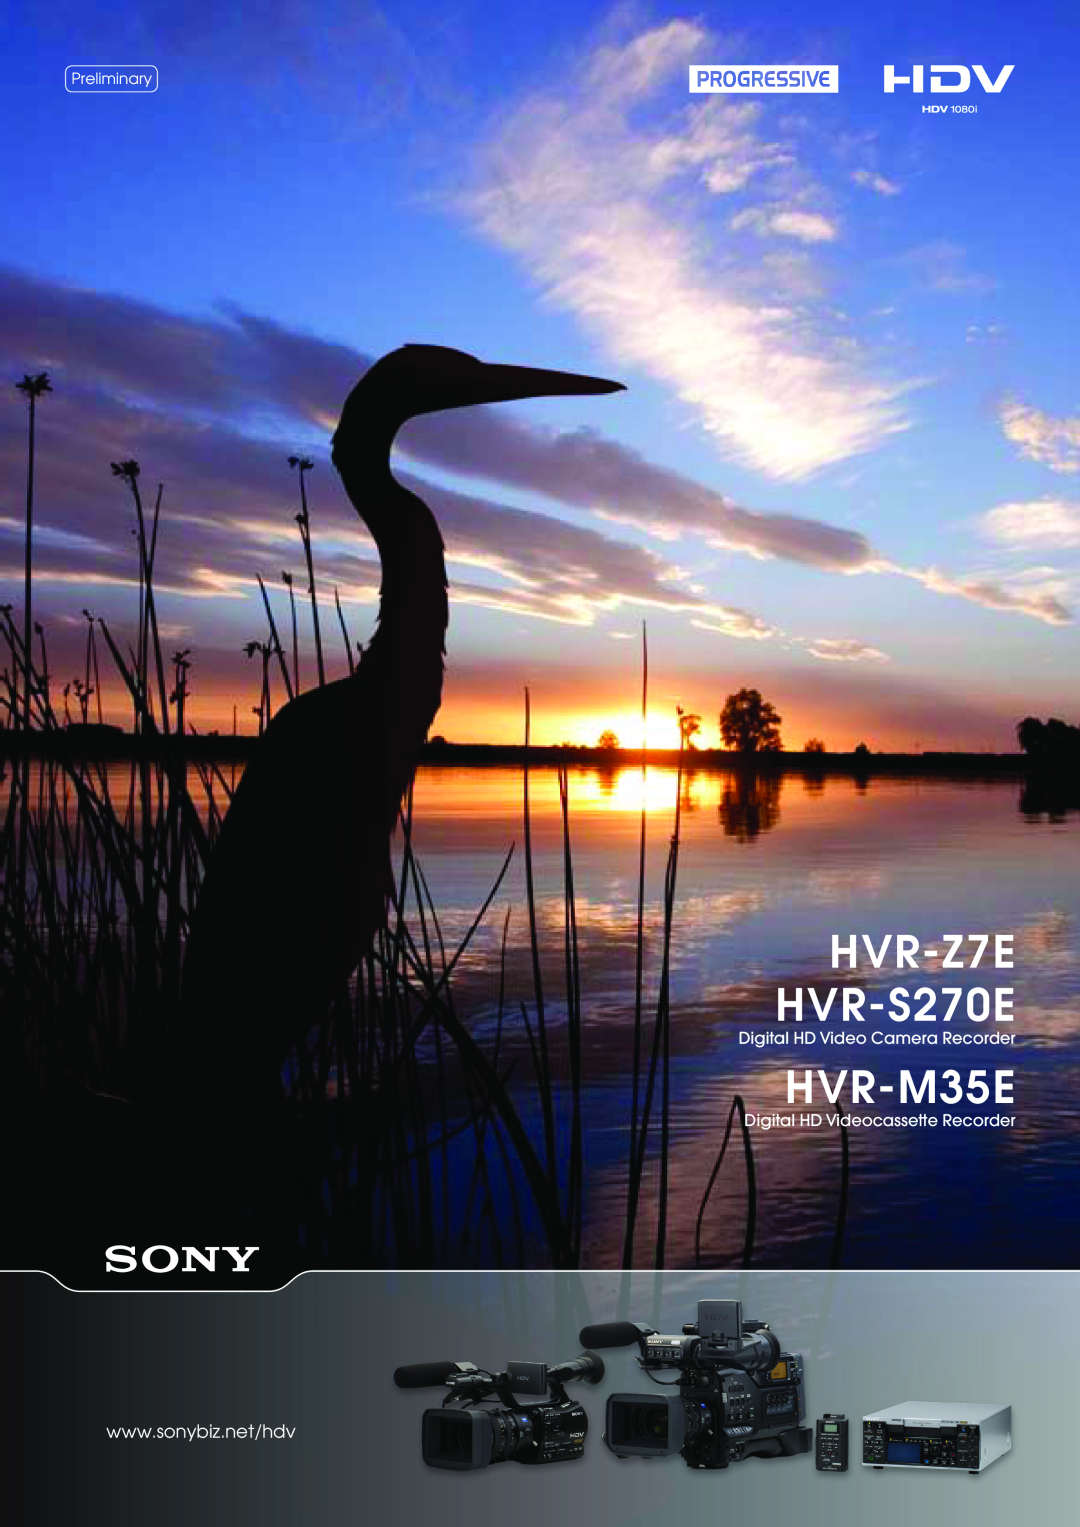 Sony manual HVR-Z7E HVR-S270E, HVR-M35E, Digital HD Video Camera Recorder, Digital HD Videocassette Recorder 